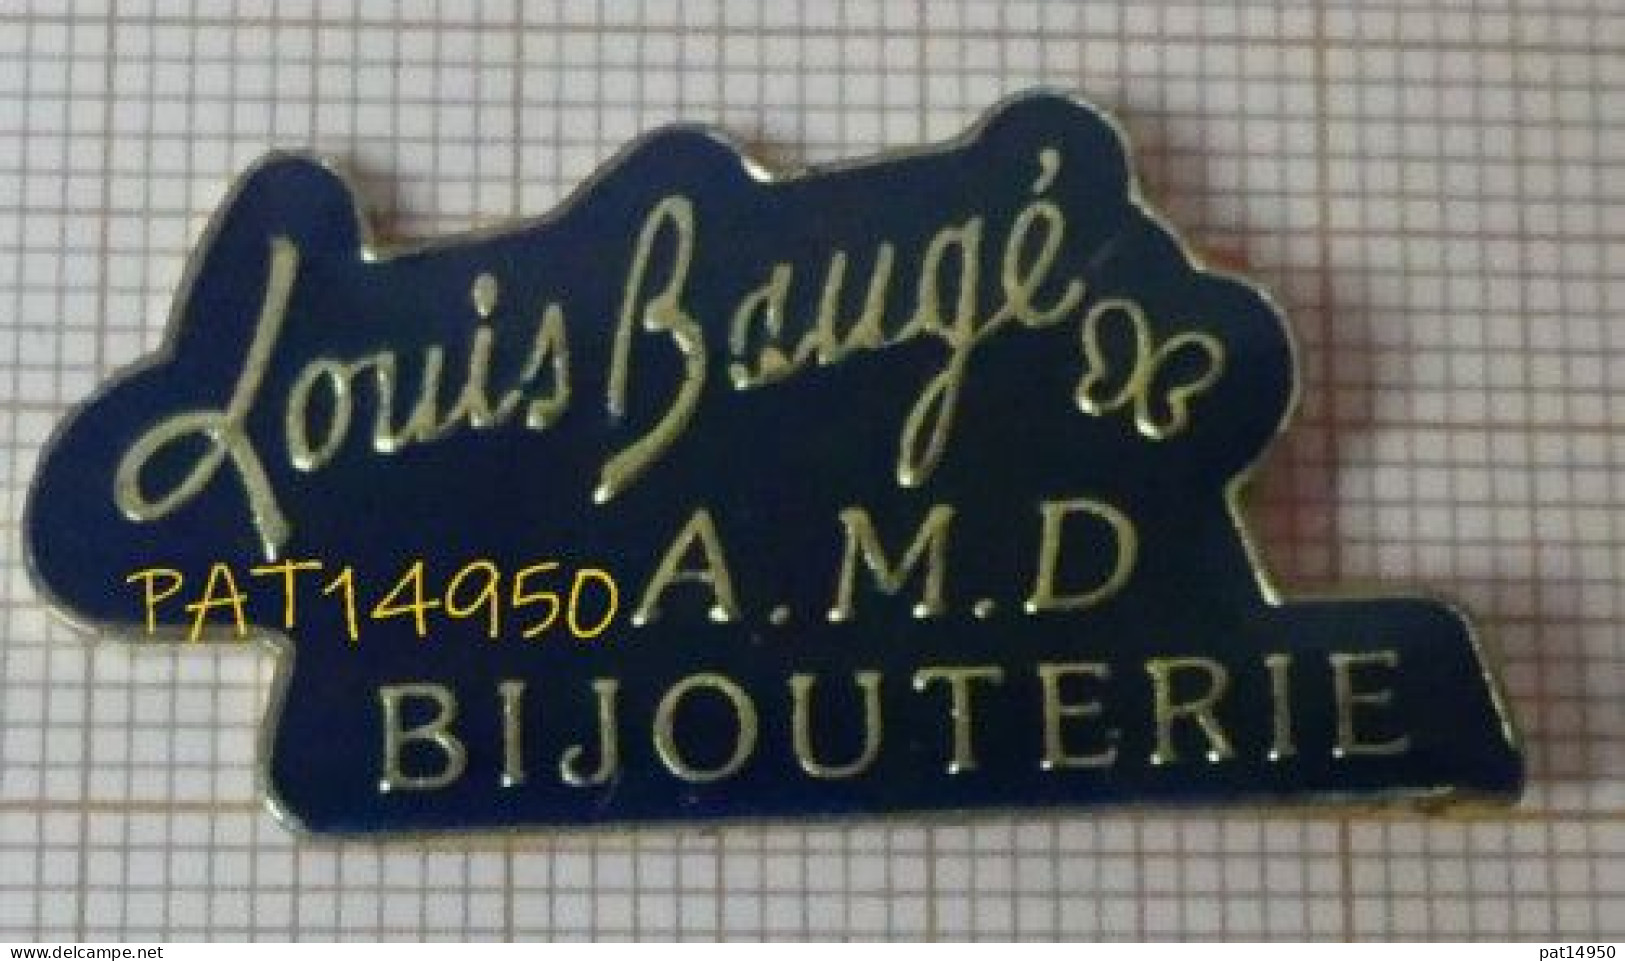 PAT14950 AMD BIJOUTERIE   Louis Baugé - Marcas Registradas